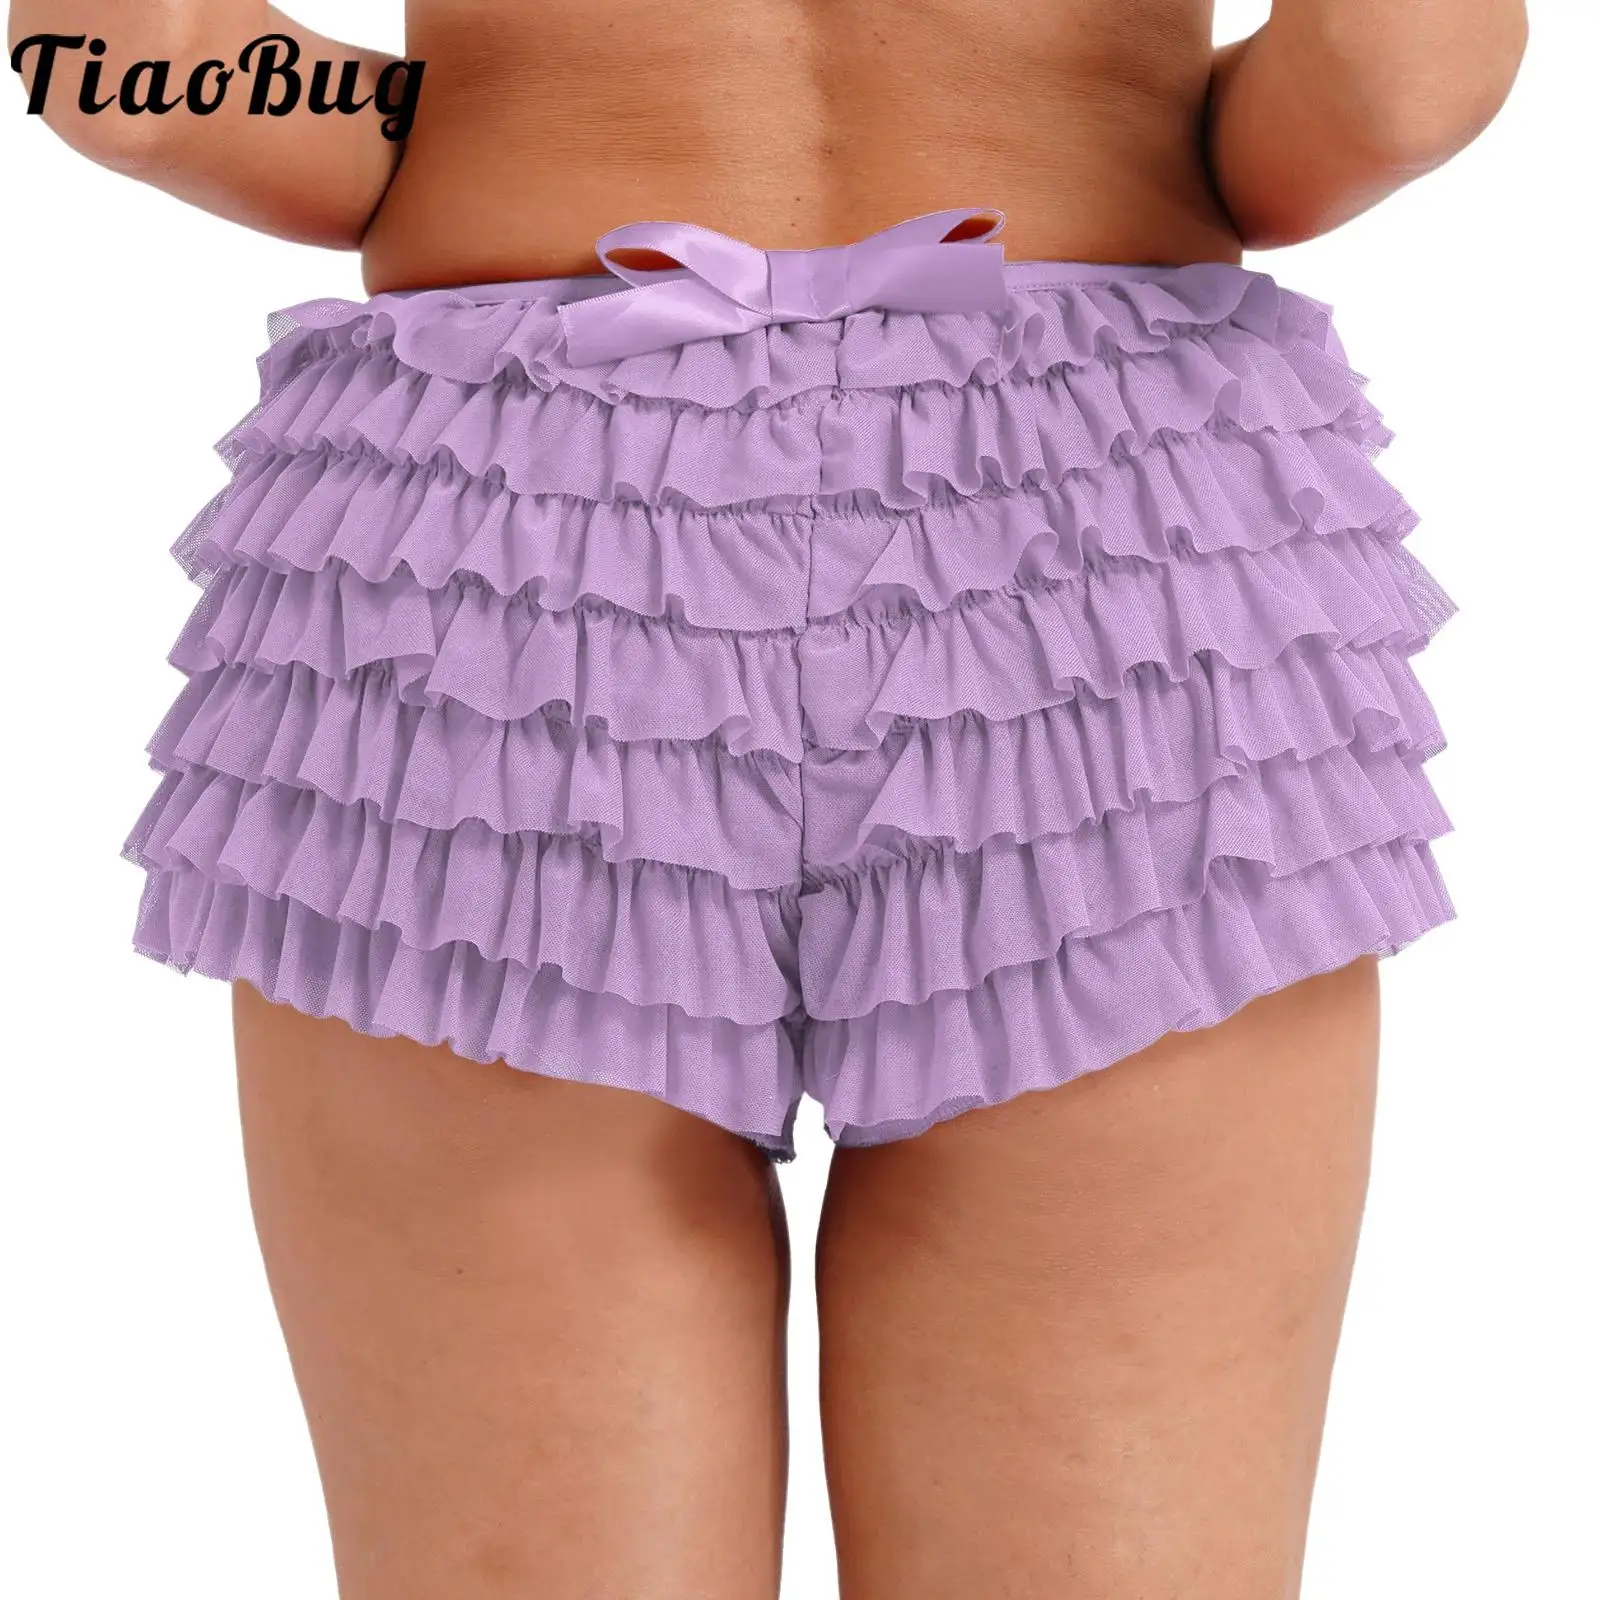 

Women's Vintage Bloomer Shorts with Ruffle Lace Underpants Victorian Pumpkin Pettipants Hot Pants Underwear Elastic Waist Shorts